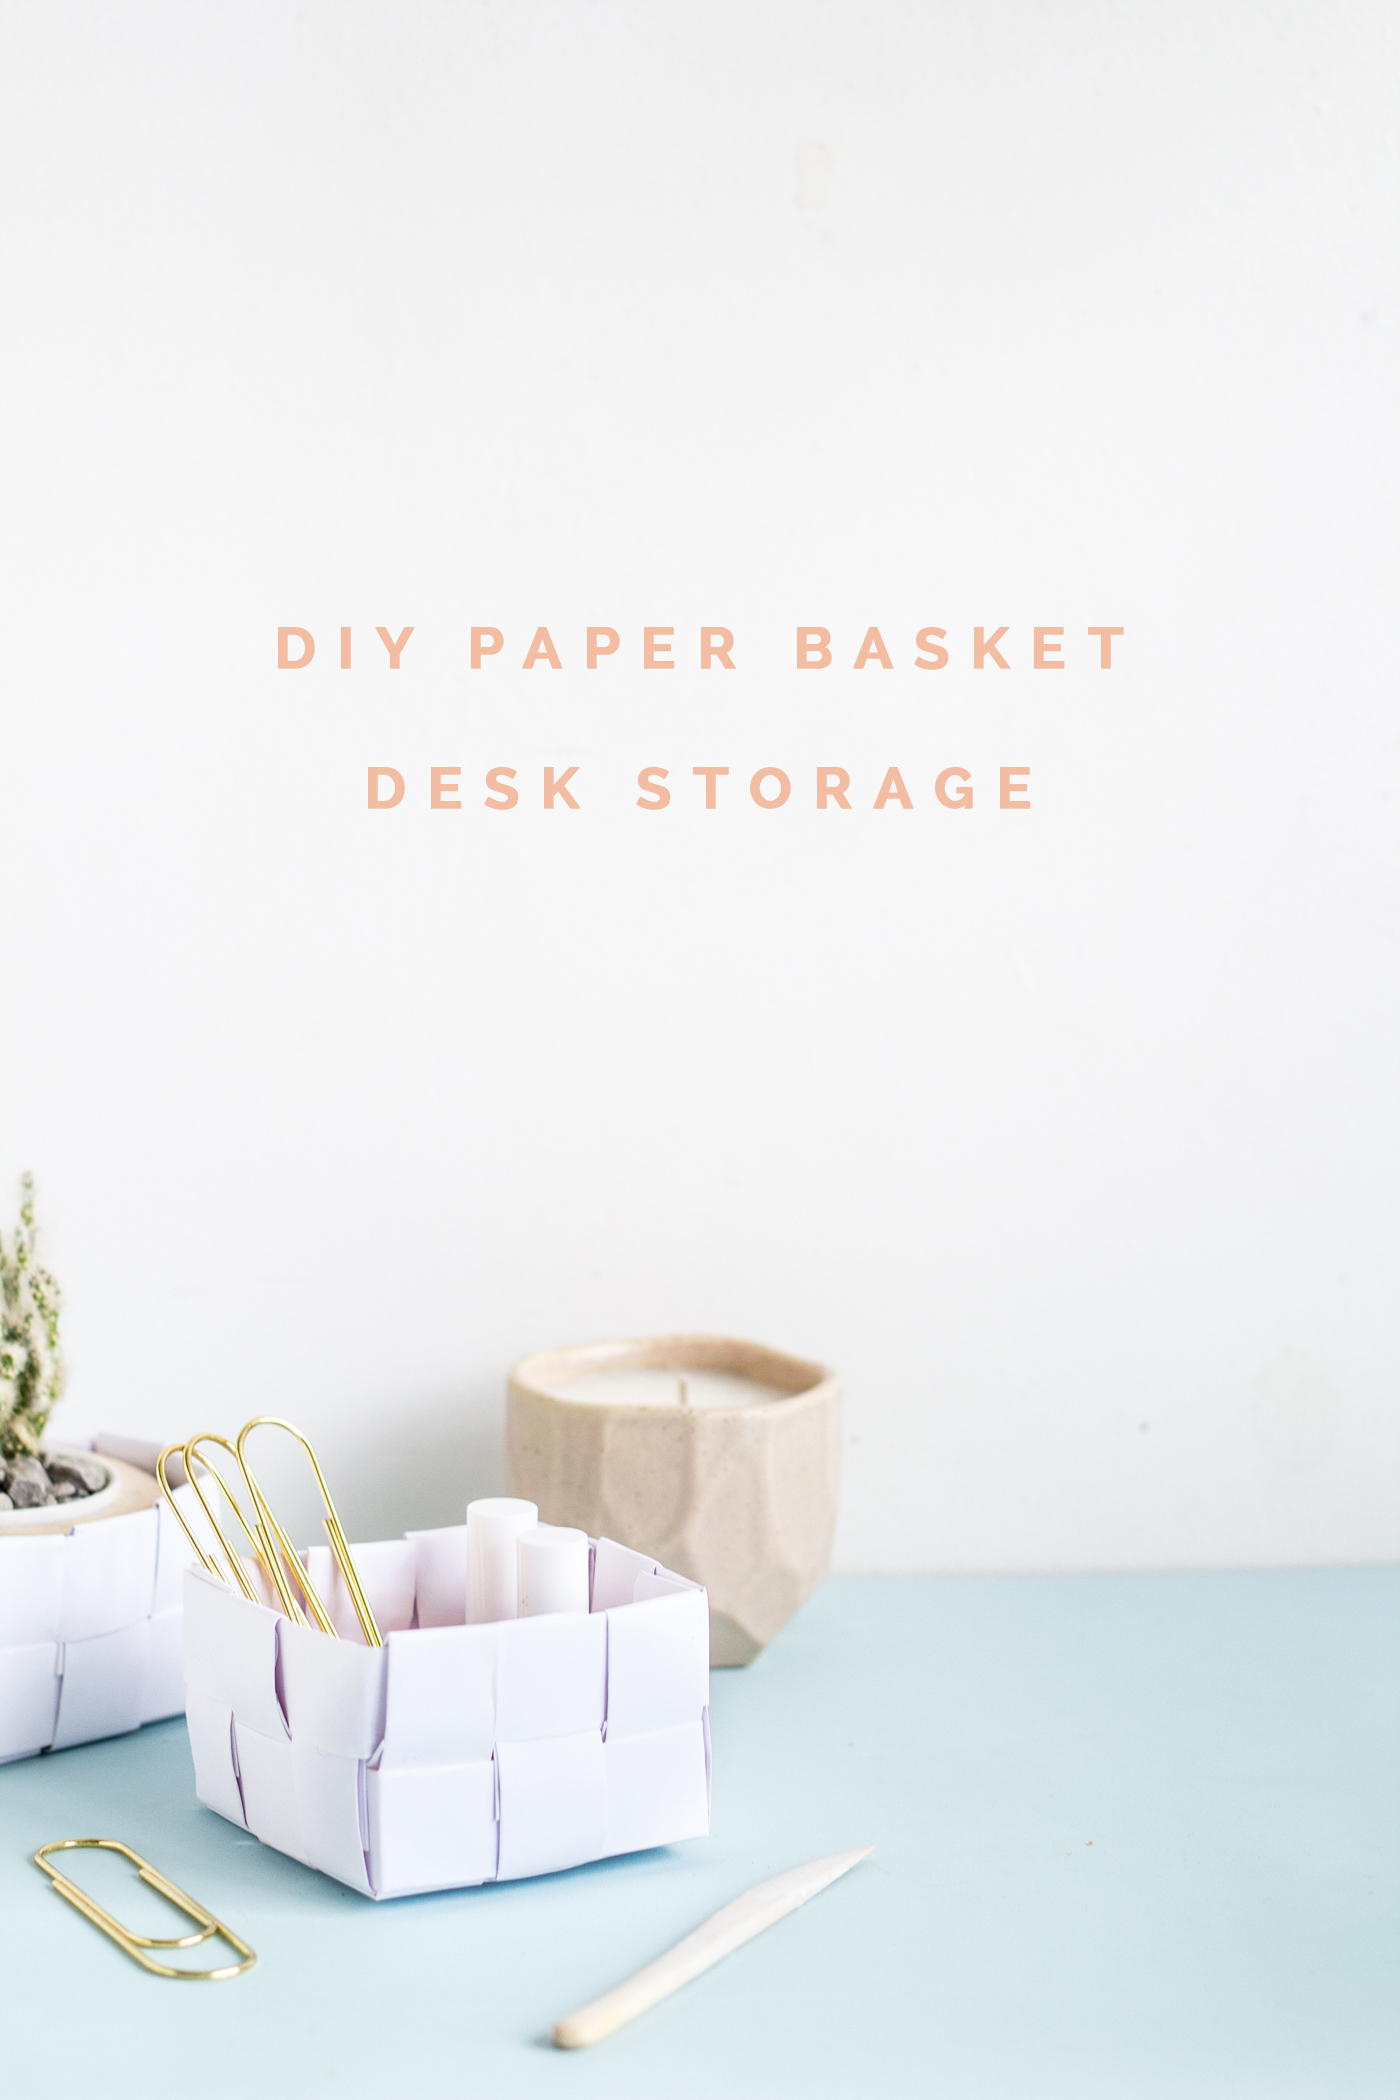 DIY Paper Basket Desk Storage Tutorial @fallfordiy